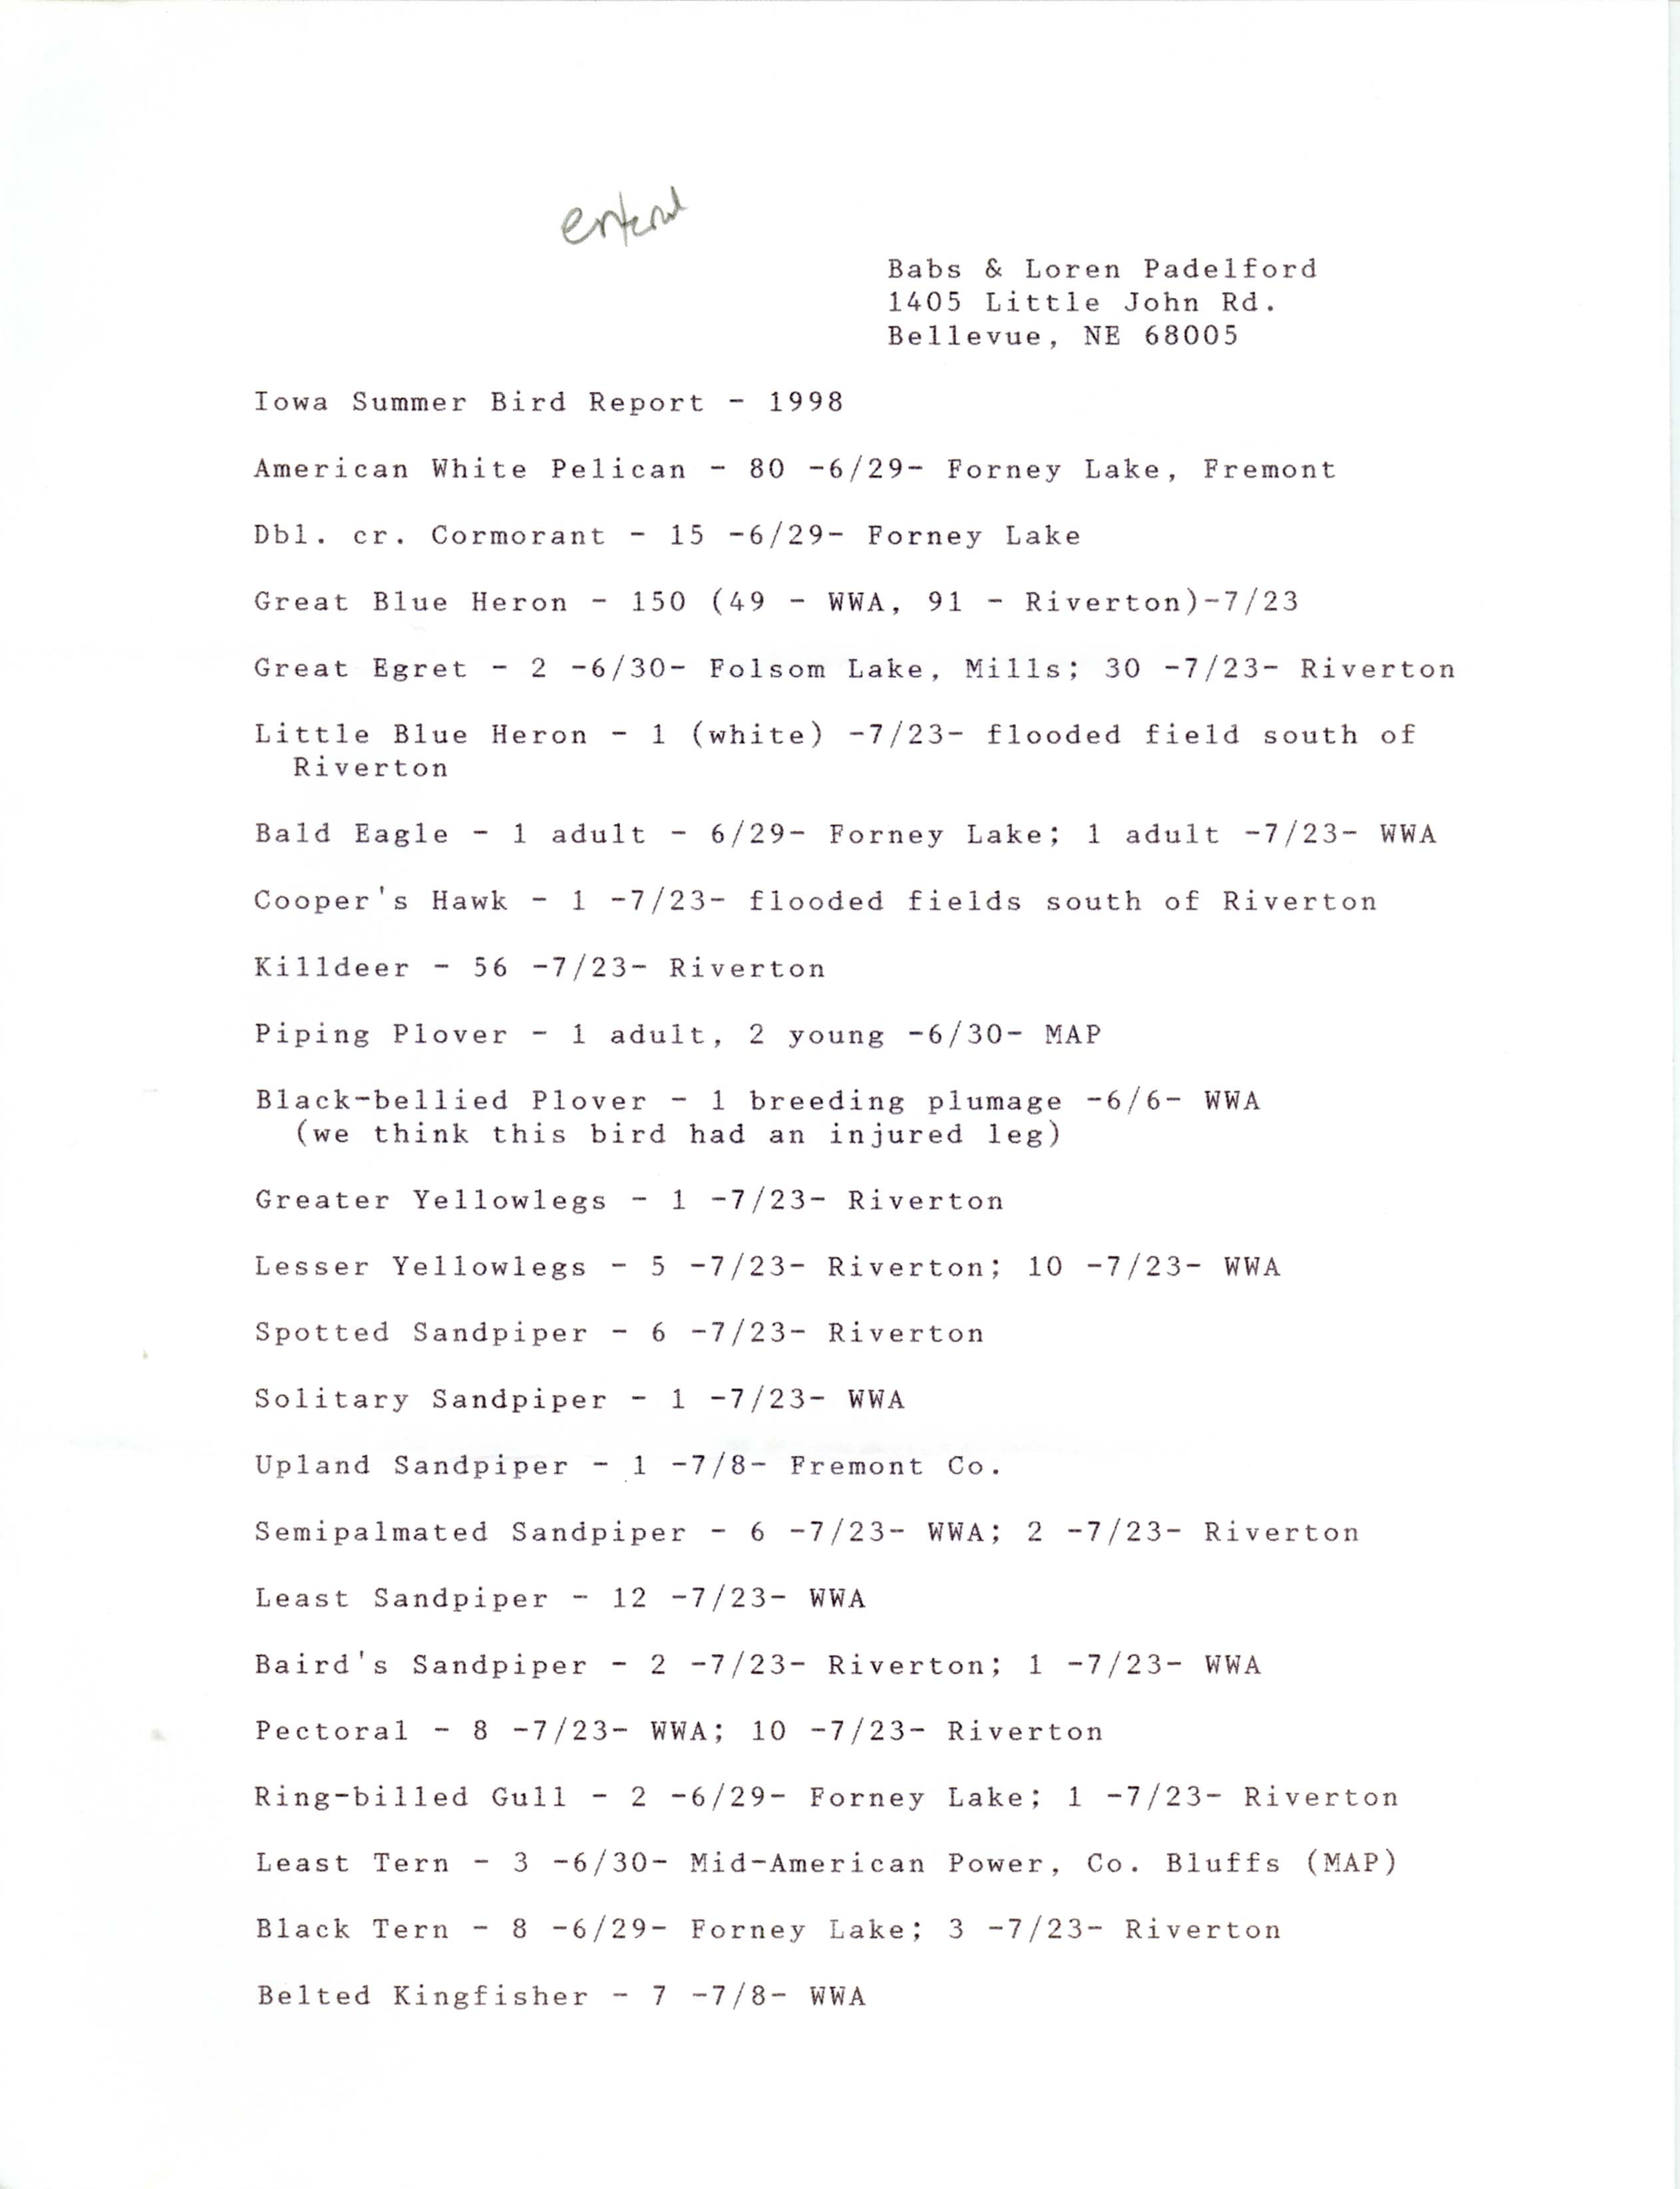 Iowa summer bird report, 1998, Babs & Loren Padelford